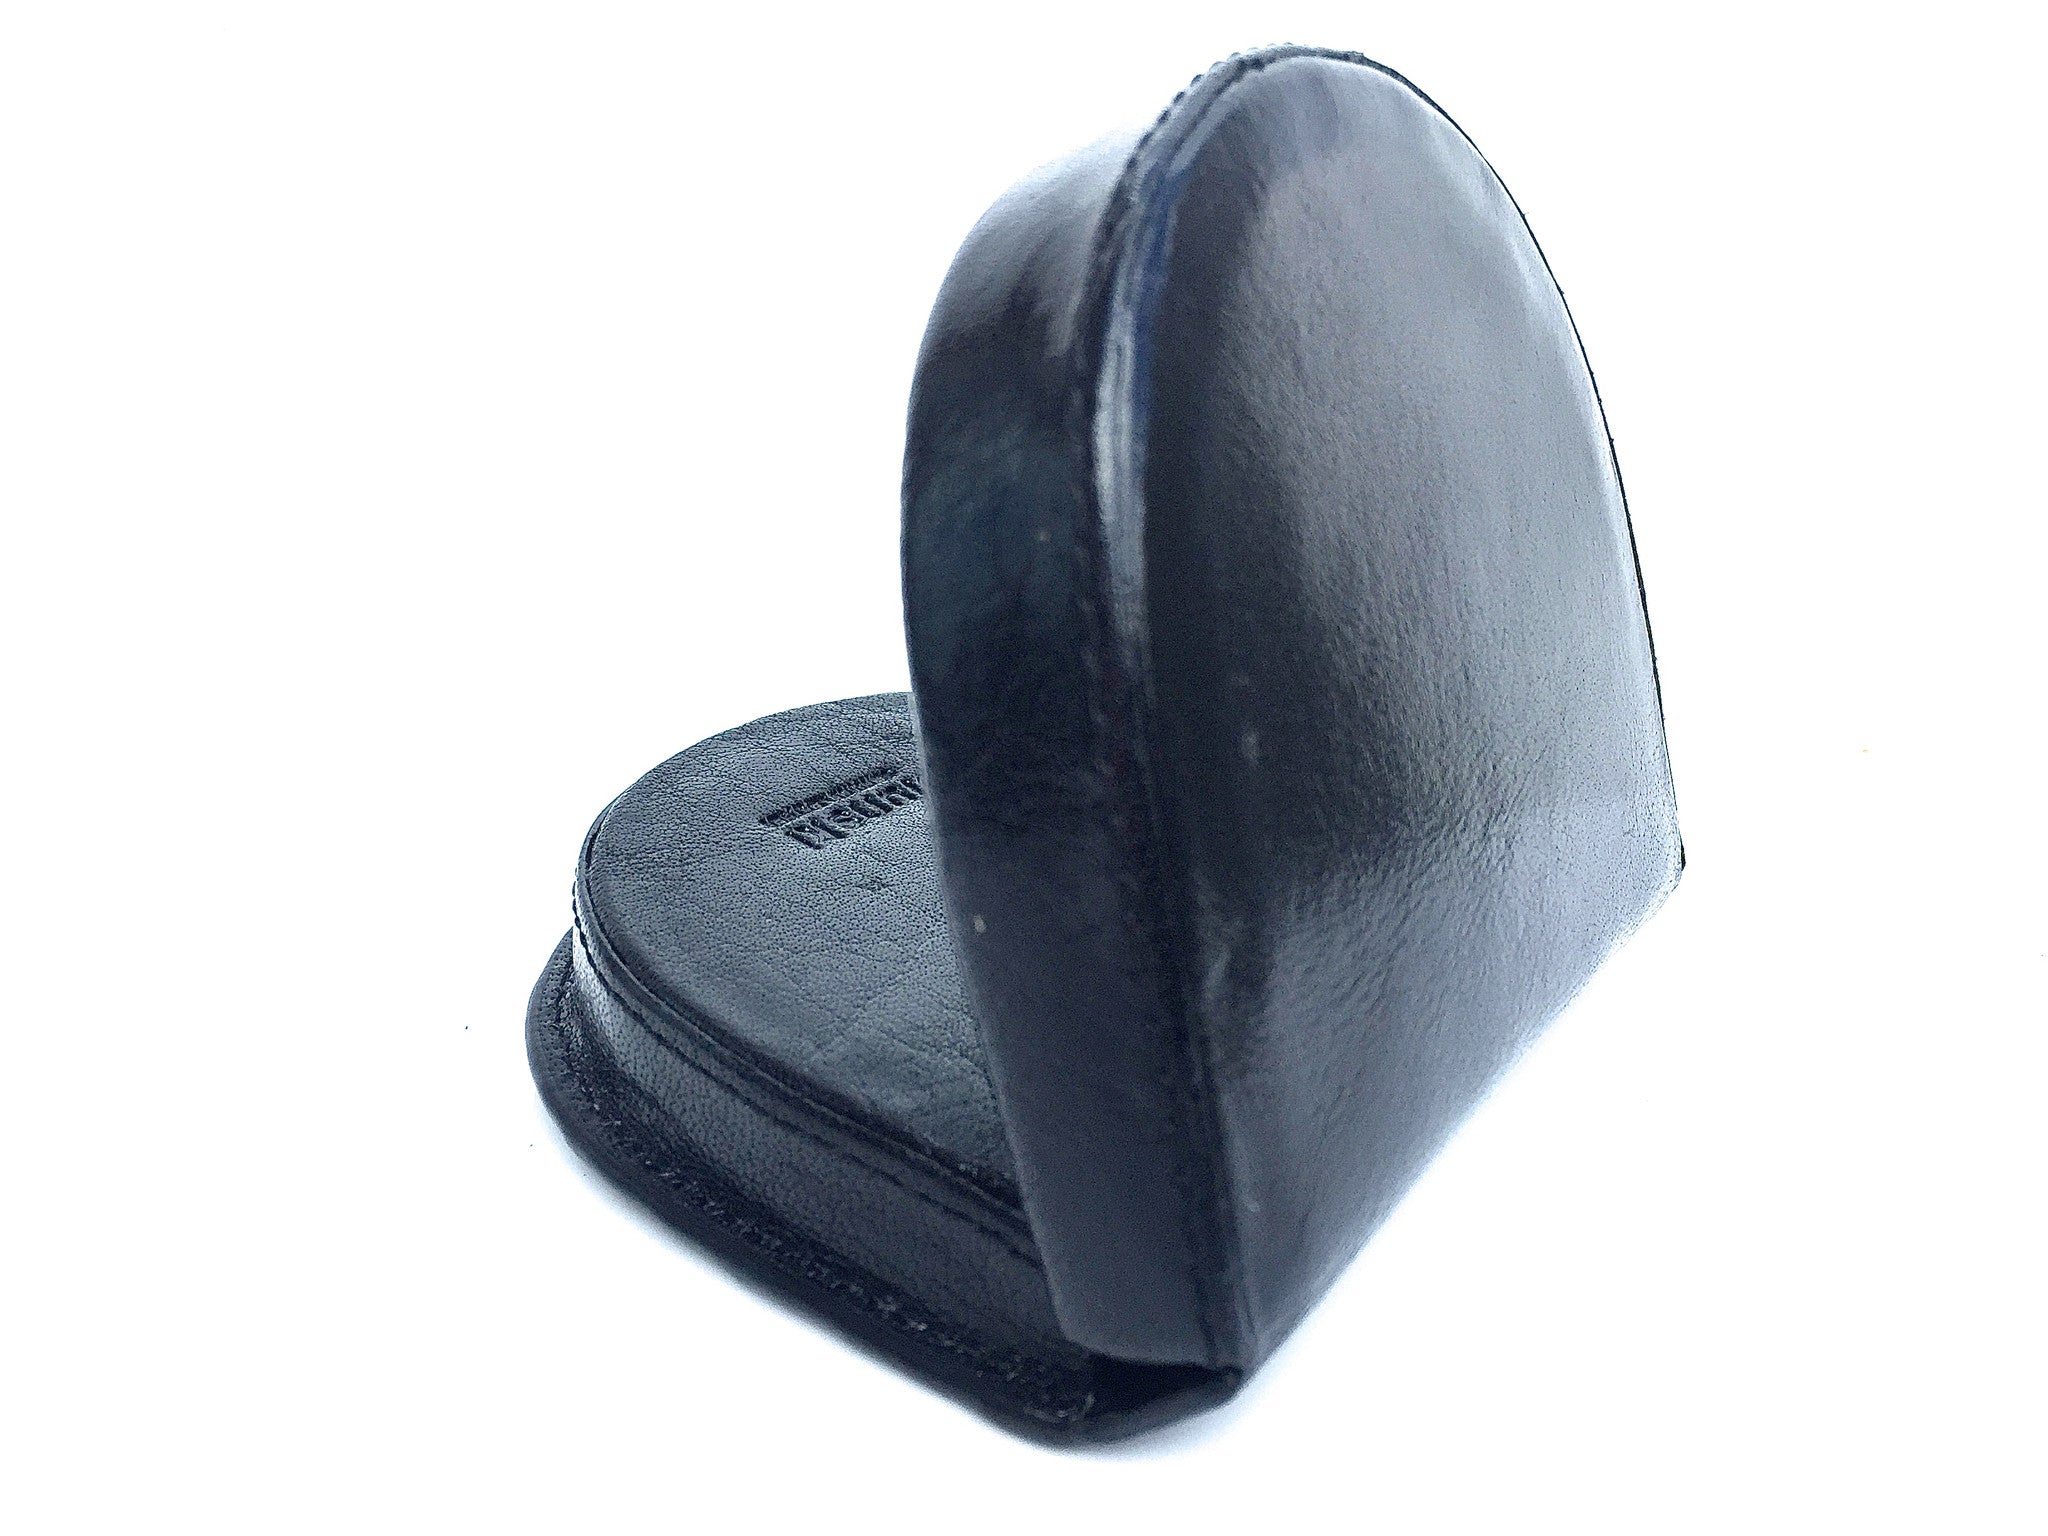 Mens Leather Horseshoe Coin Tray Purse In Black By Golunski - Baked Apple WM Ltd